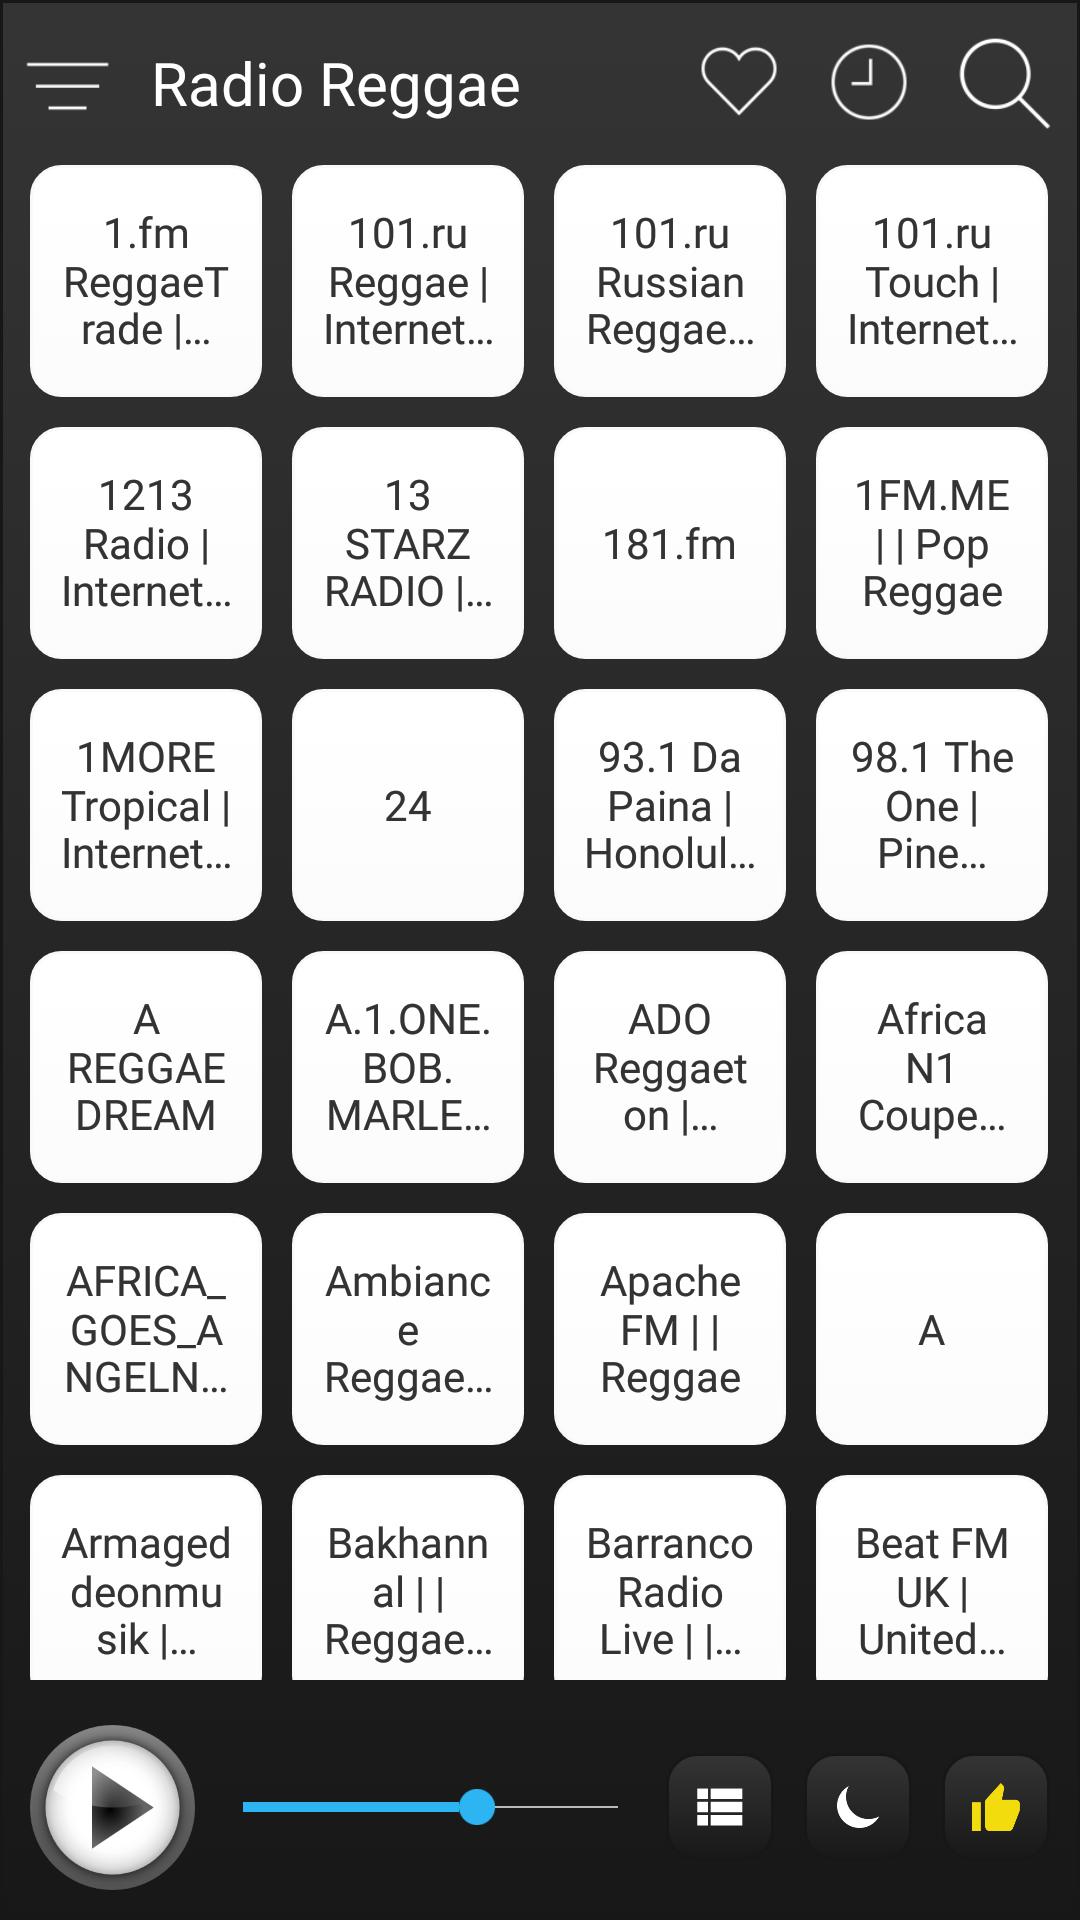 Reggae Radio Stations Online - Reggae FM AM Music for Android - APK Download